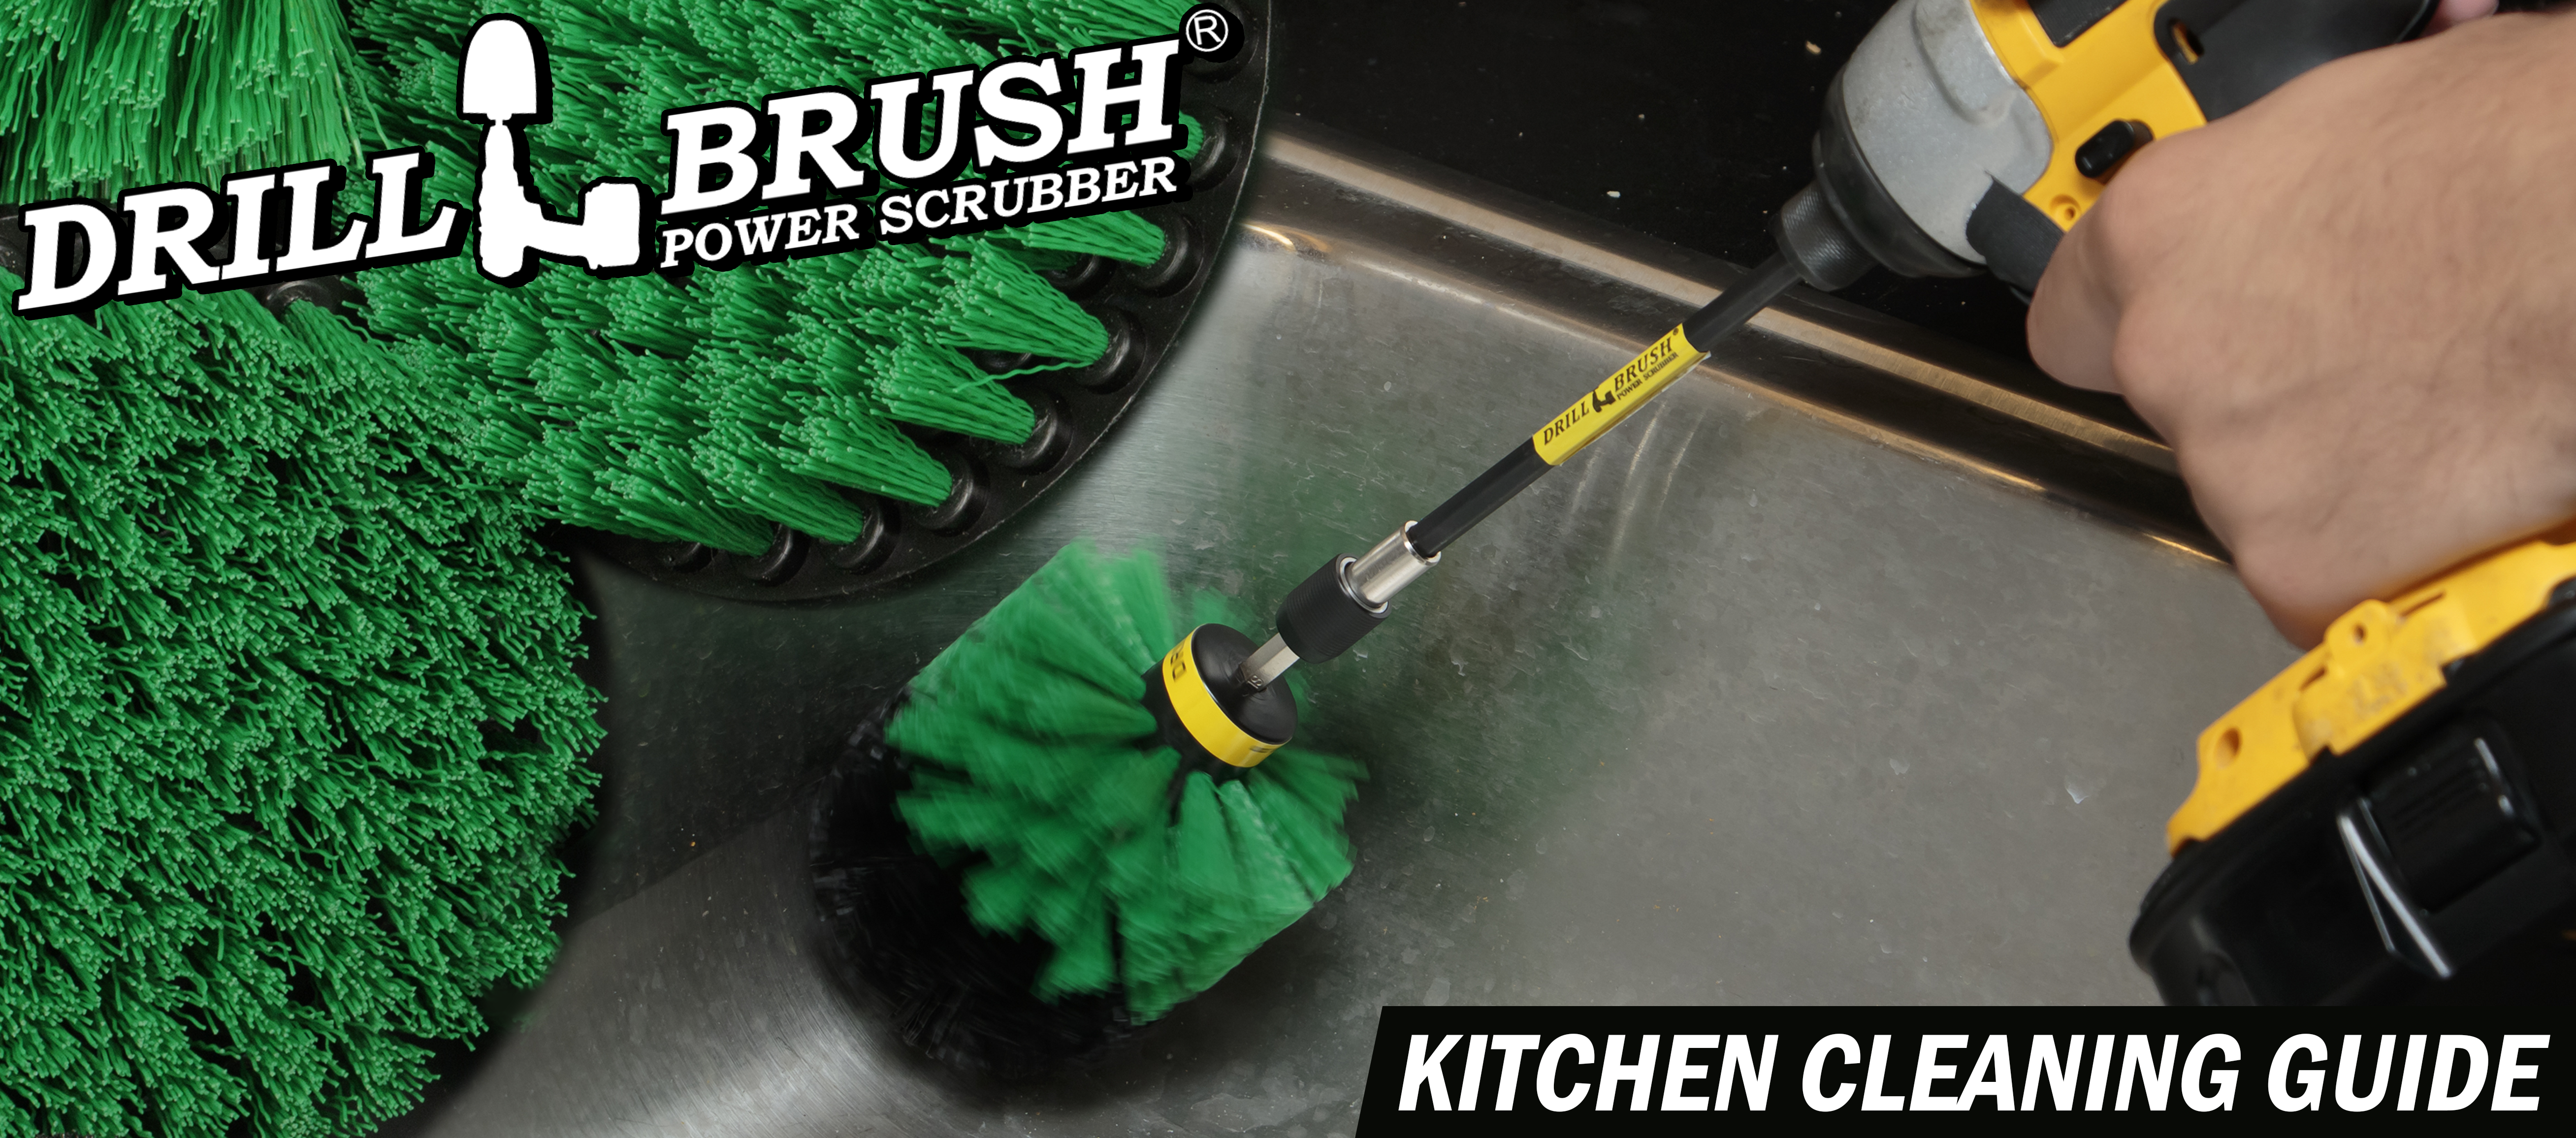 Drillbrush oven cleaner brush set - Kitchen Cleaning Brush Drill Brush Set